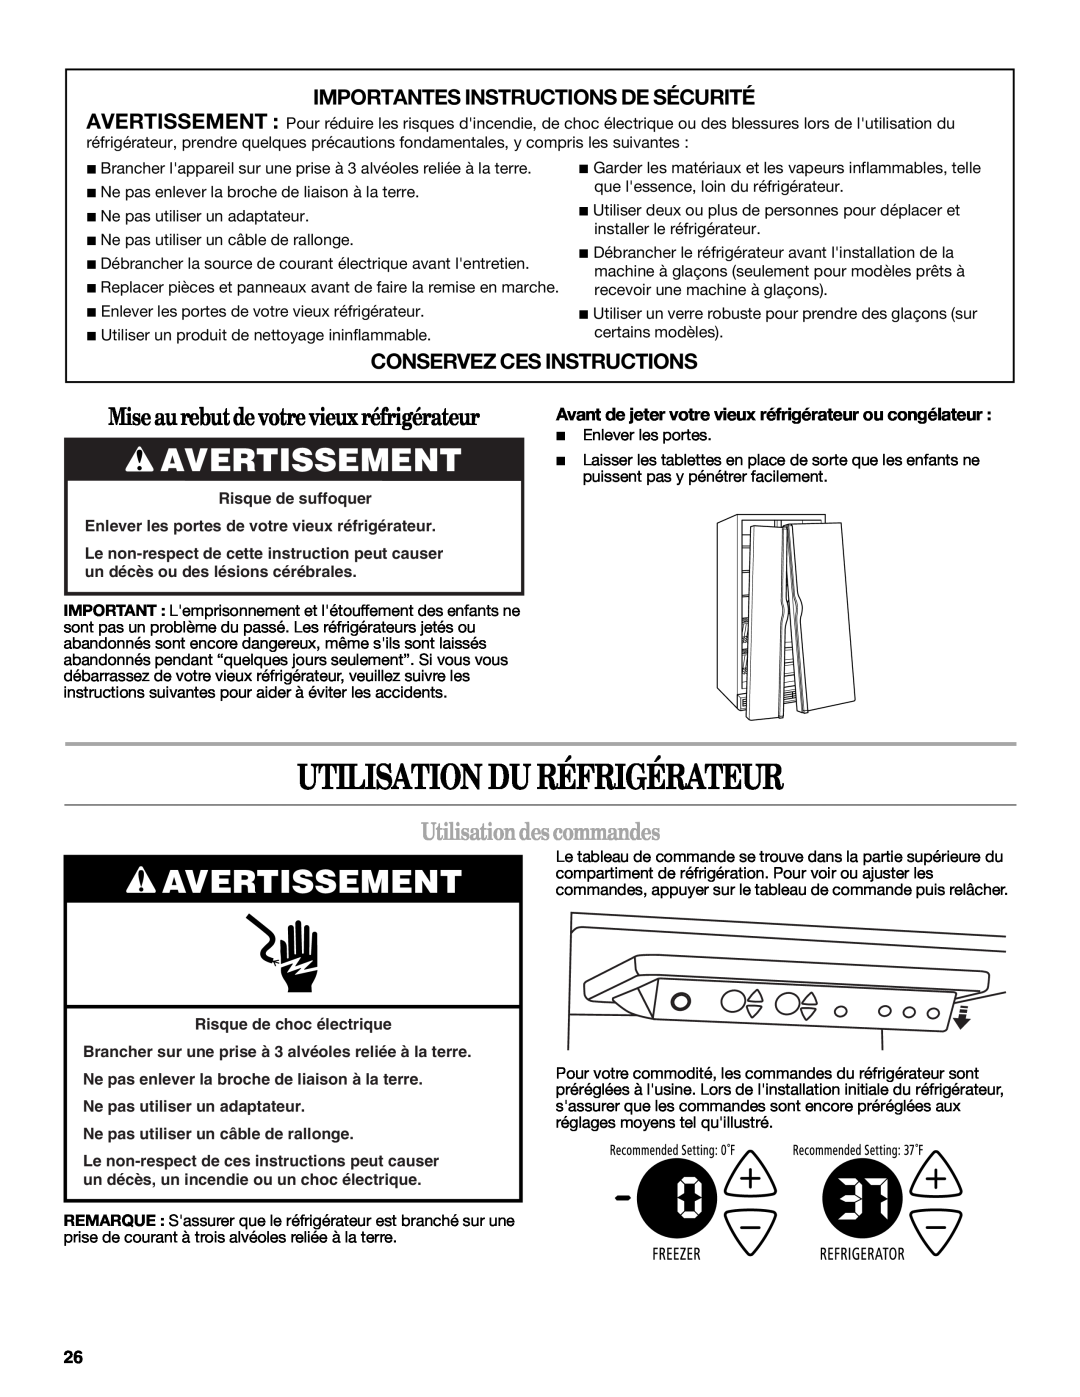 Whirlpool GD5RHAXRQ00, ED2KVEXVQ01 Utilisation Du Réfrigérateur, Avertissement, Miseau rebutdevotrevieuxréfrigérateur 